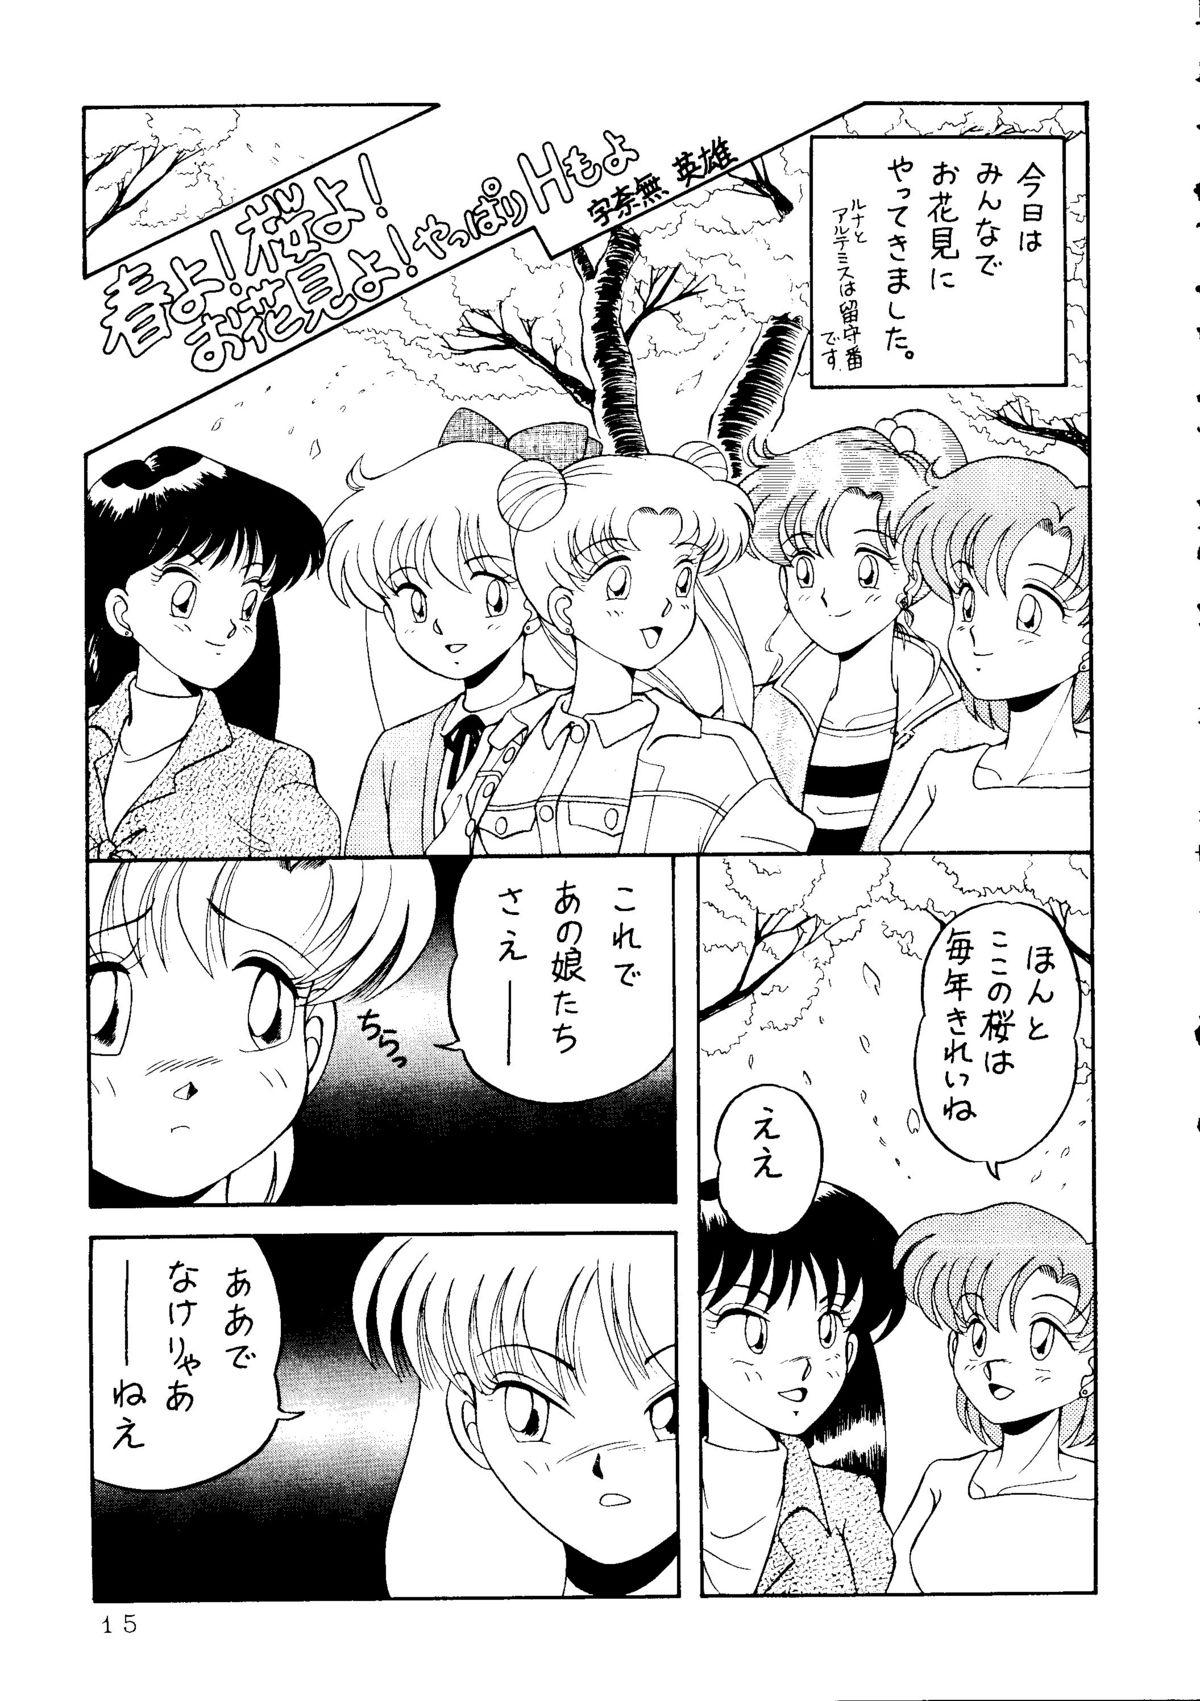 Loira MAKE-UP R - Sailor moon Boys - Page 12